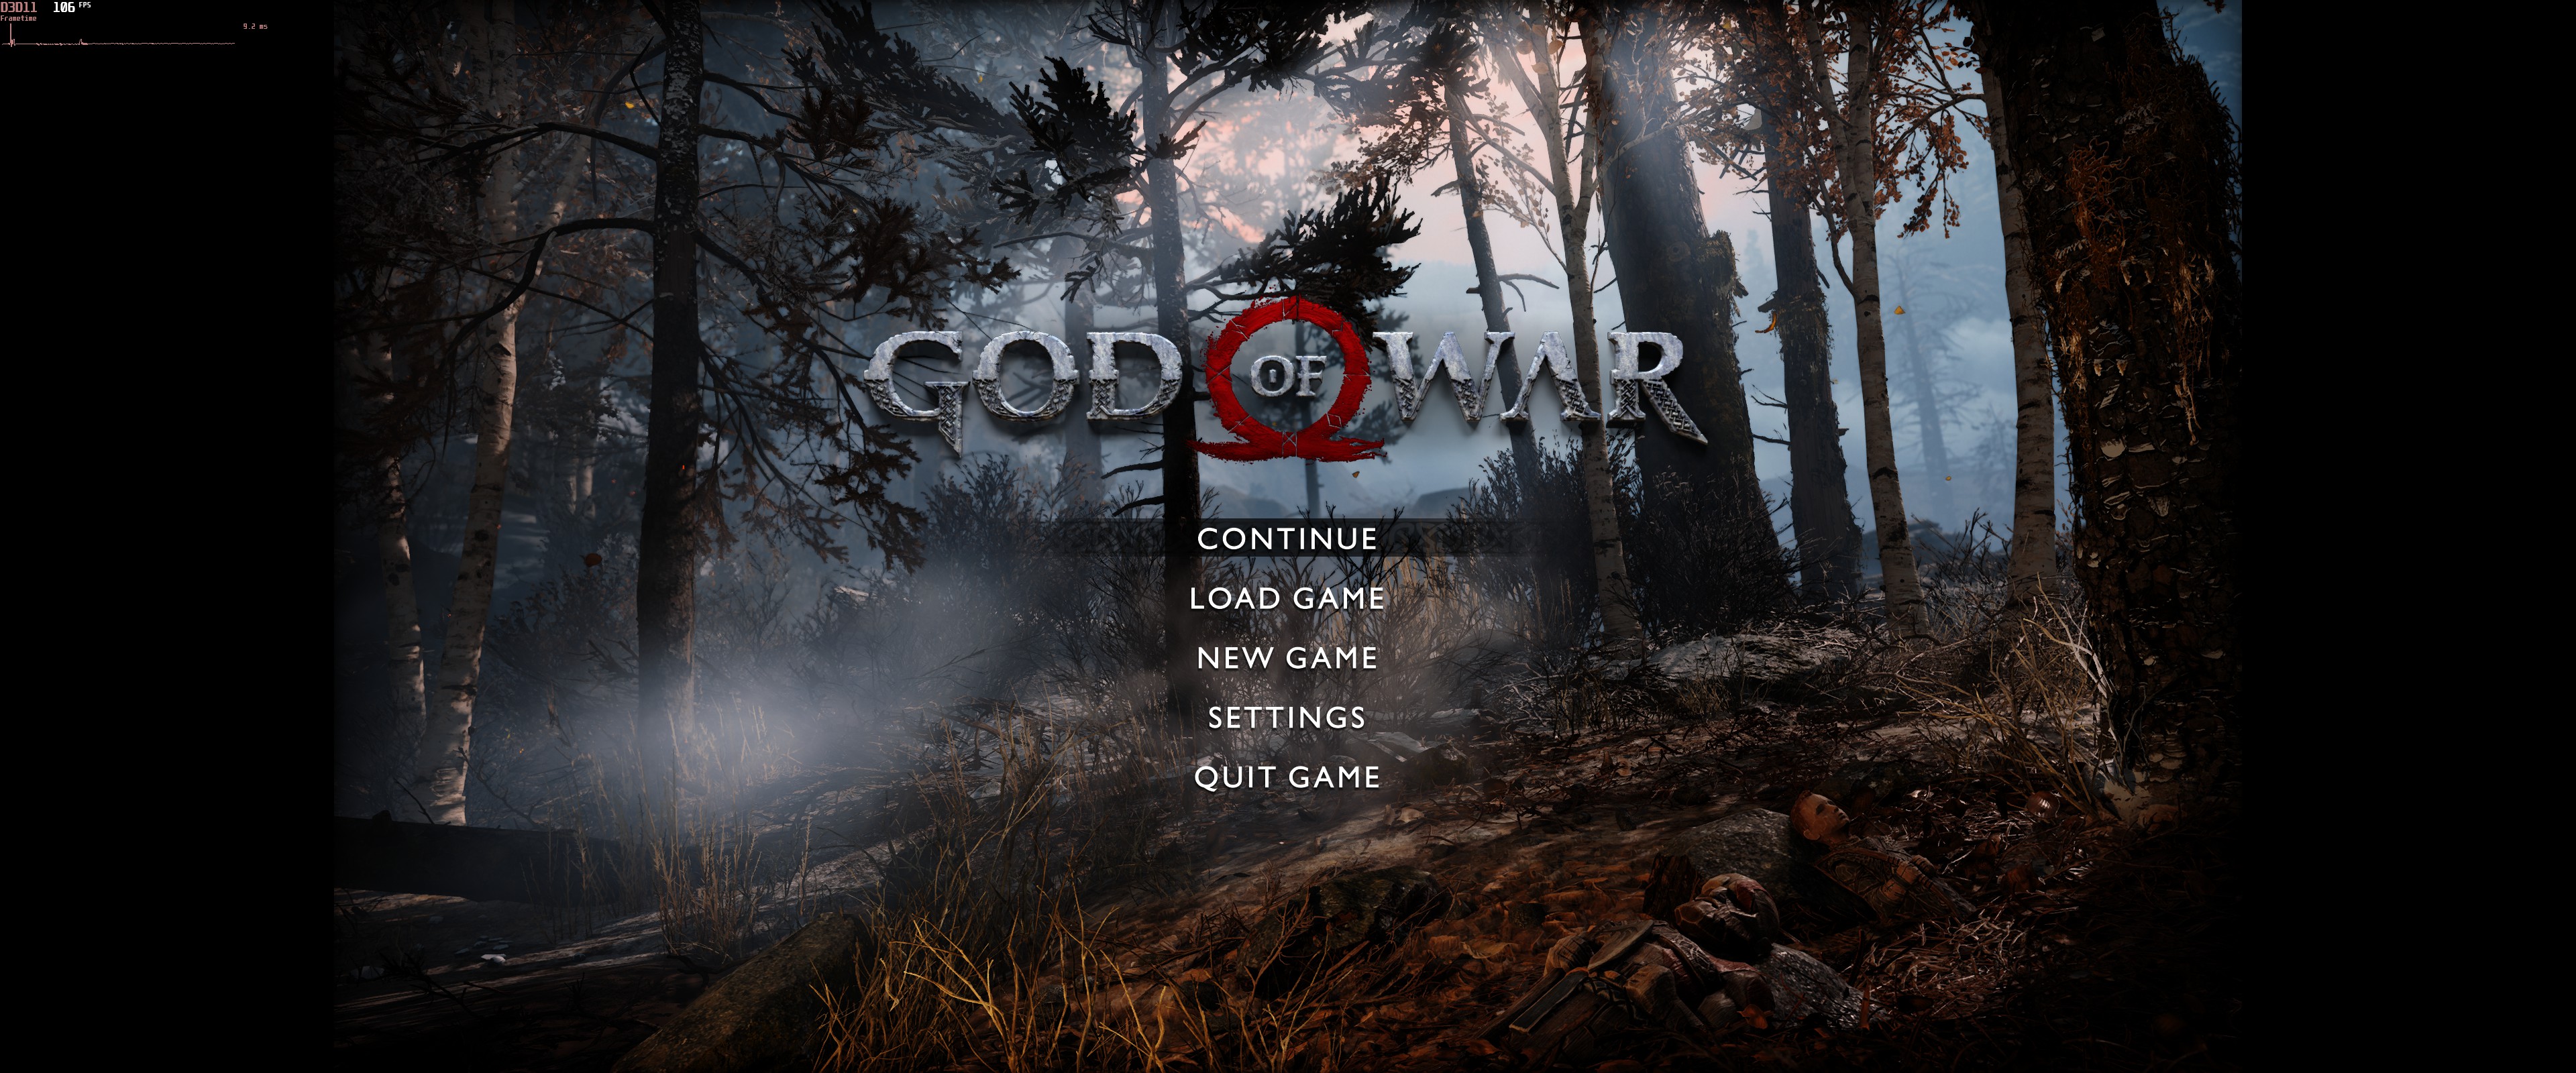 God of War en PC ofrece casi todo lo que esperábamos